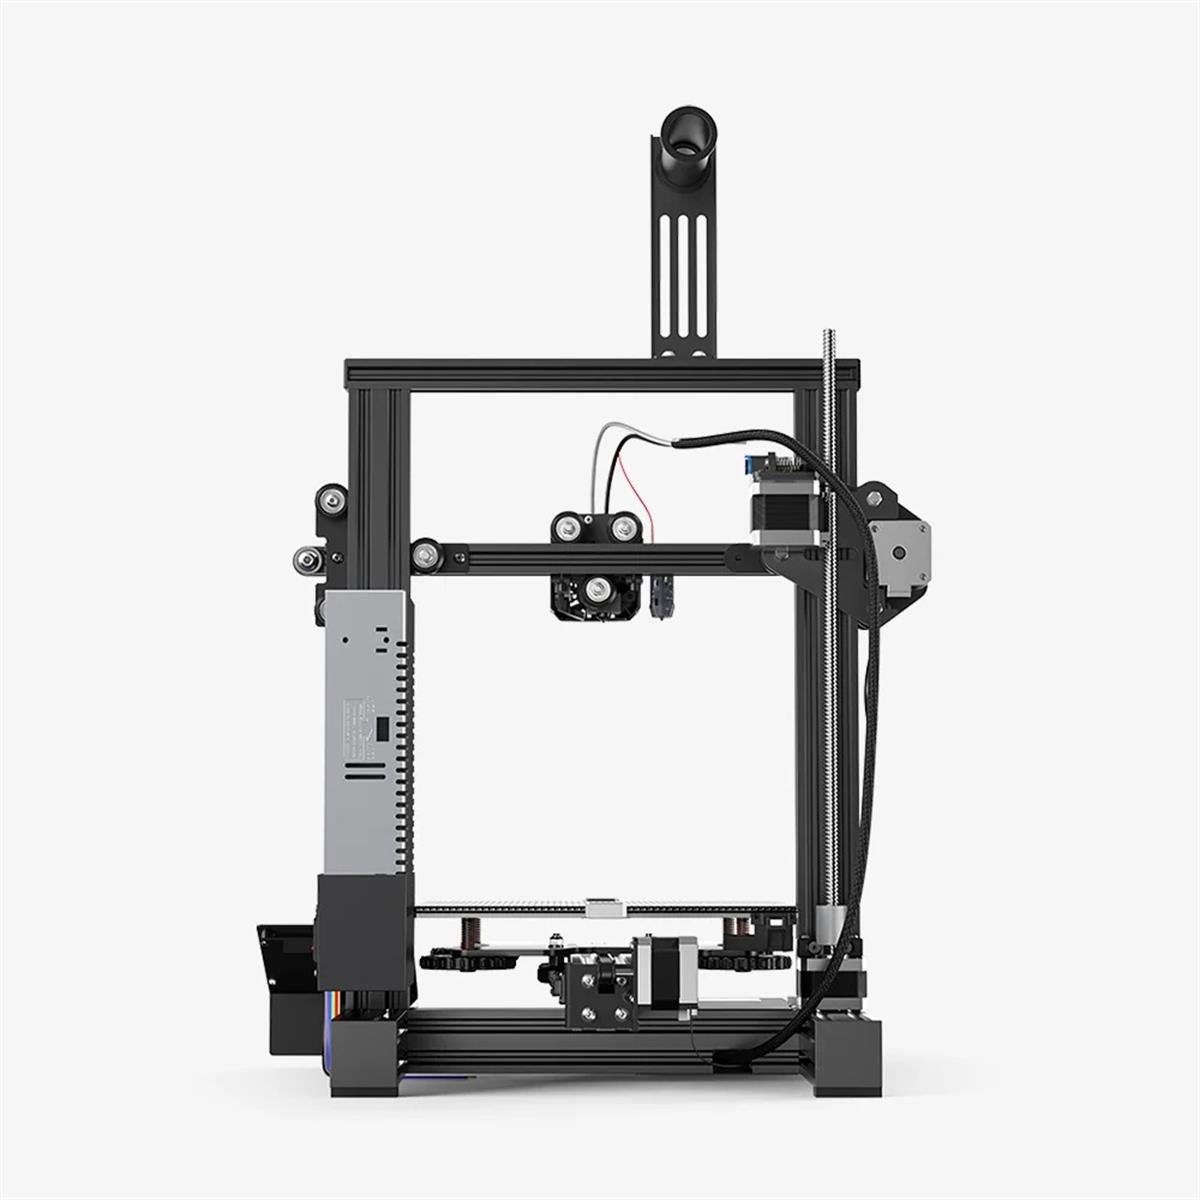 Creality Ender 3 NEO - FDM 3D printer